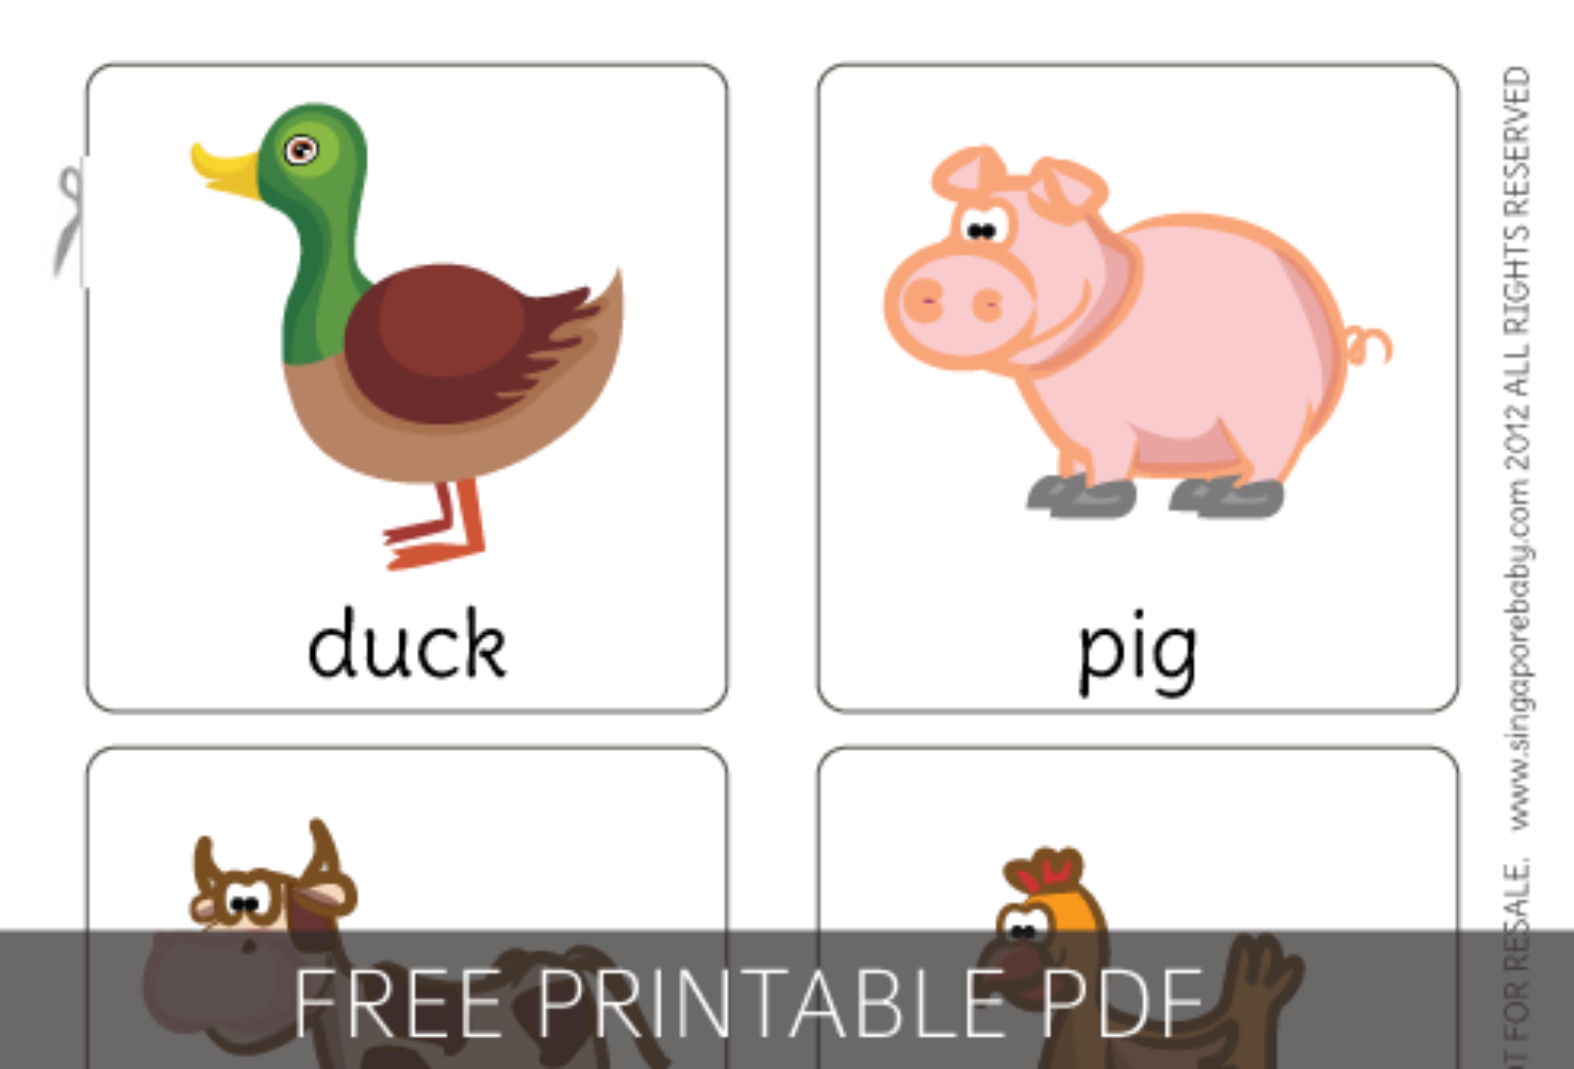 Free Printable Pdf Farm Animals Flashcards | Julianna | Farm Animals - Free Printable Farm Animal Flash Cards